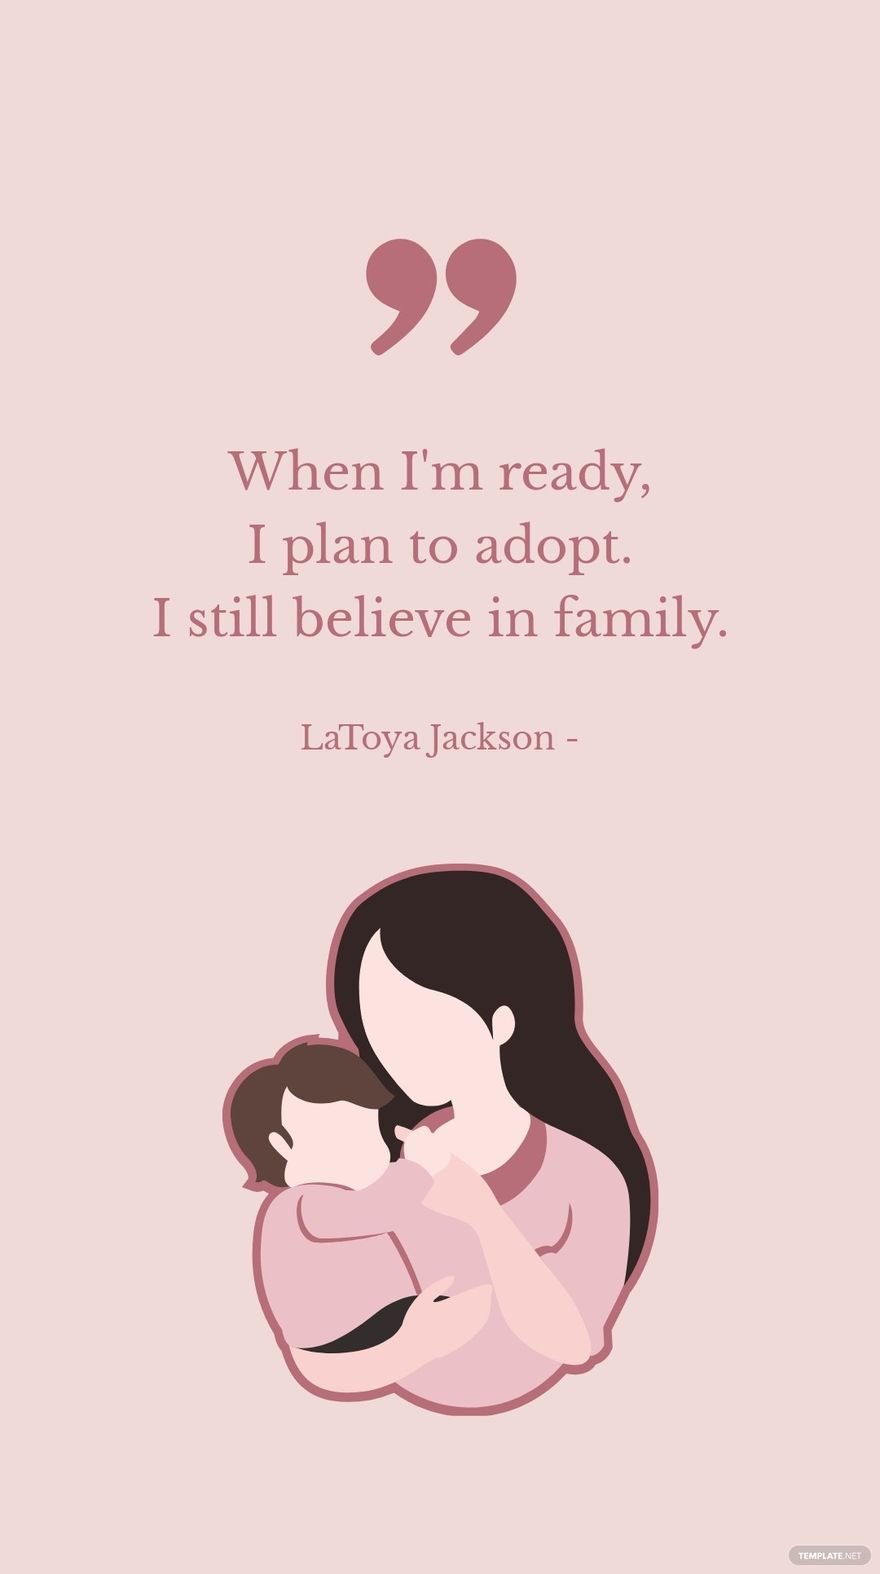 LaToya Jackson - When I'm ready, I plan to adopt. I still believe in family. in JPG